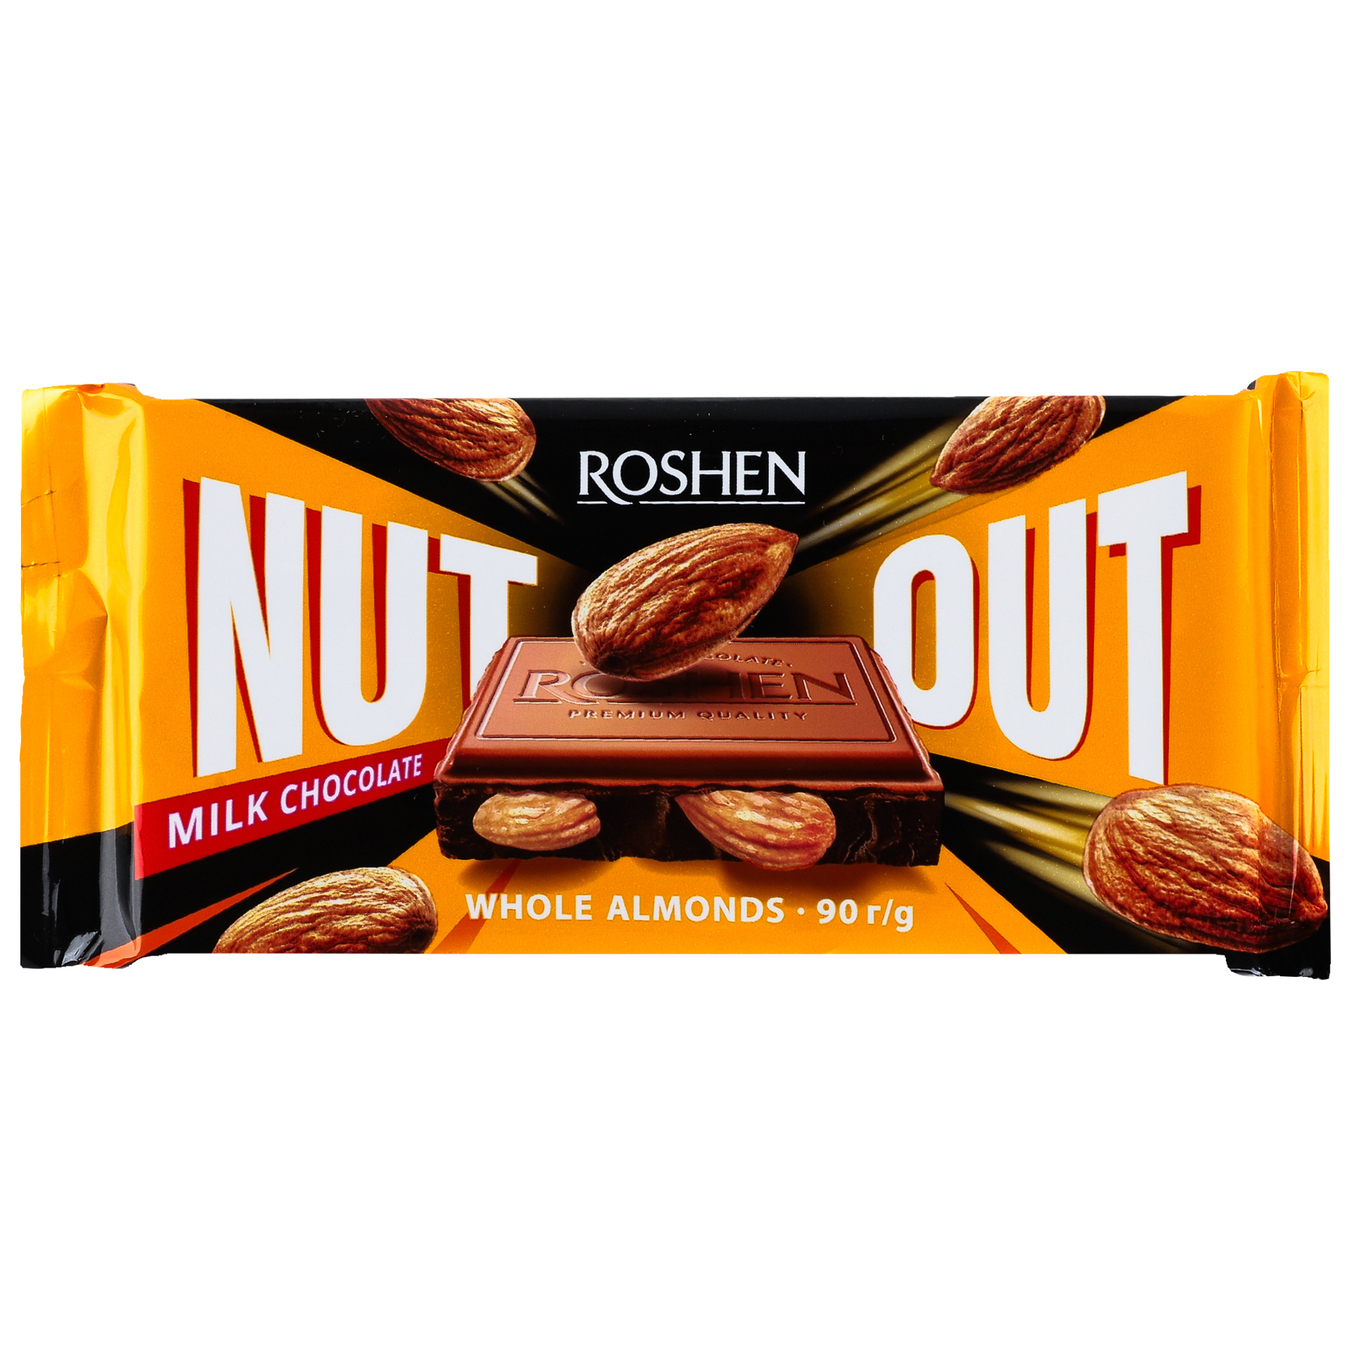 Roshen Nut milk chocolate with whole almonds 90g